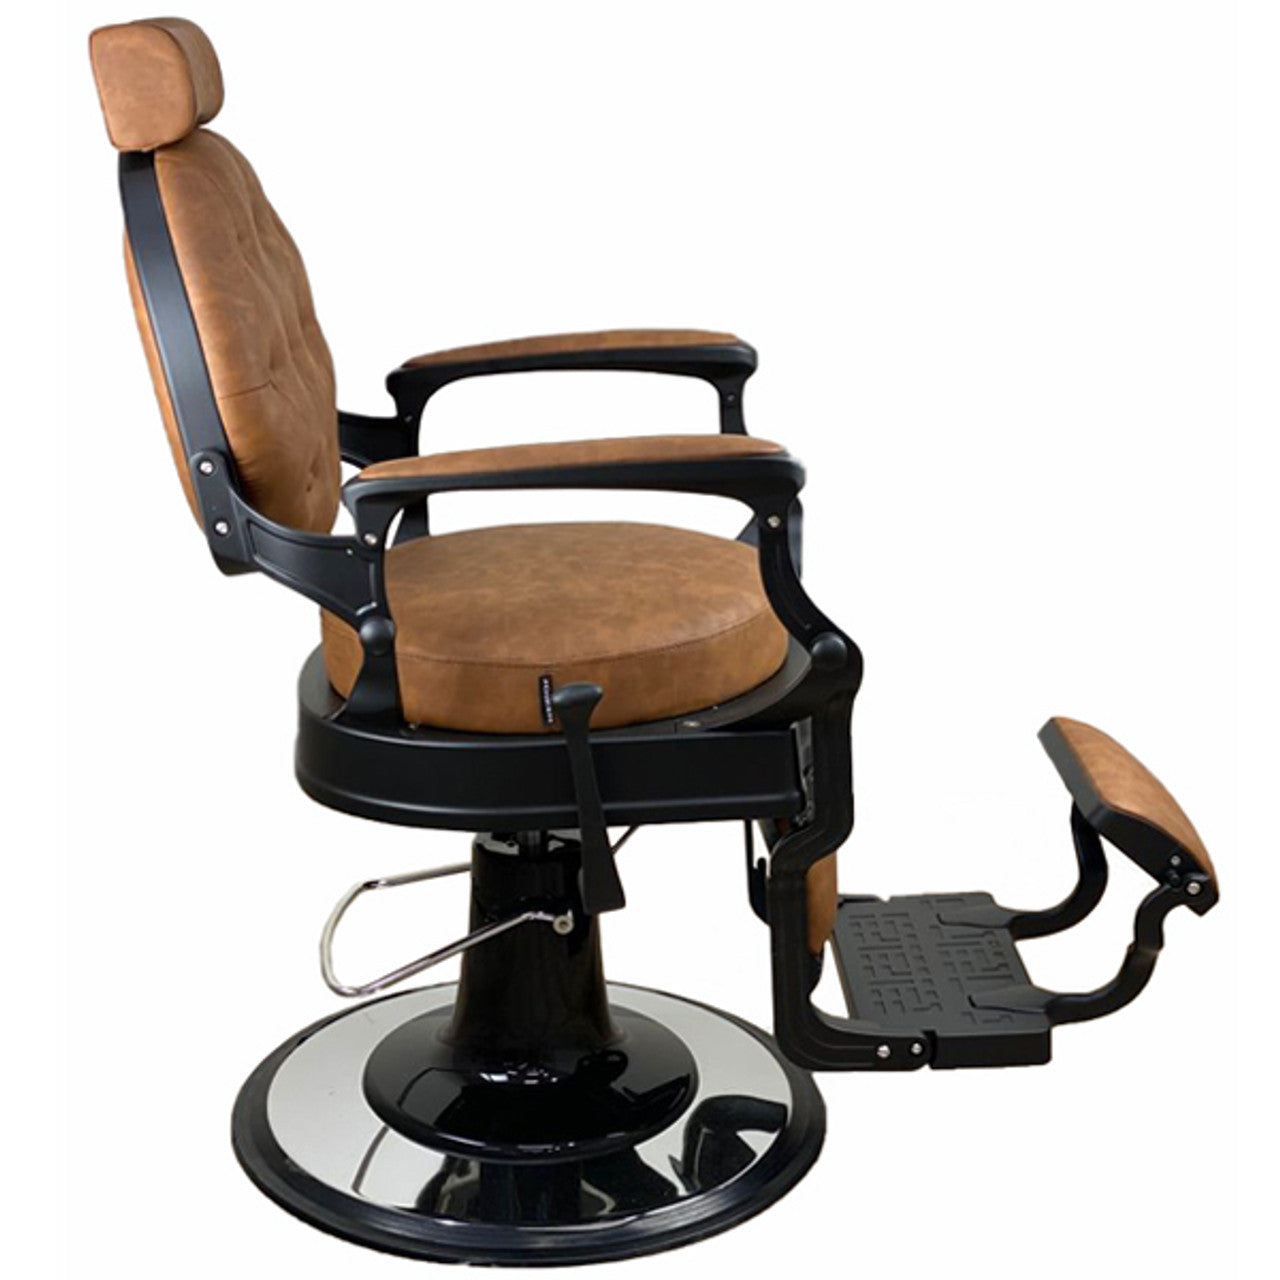 Joiken Harlem Barber Chair - Tan